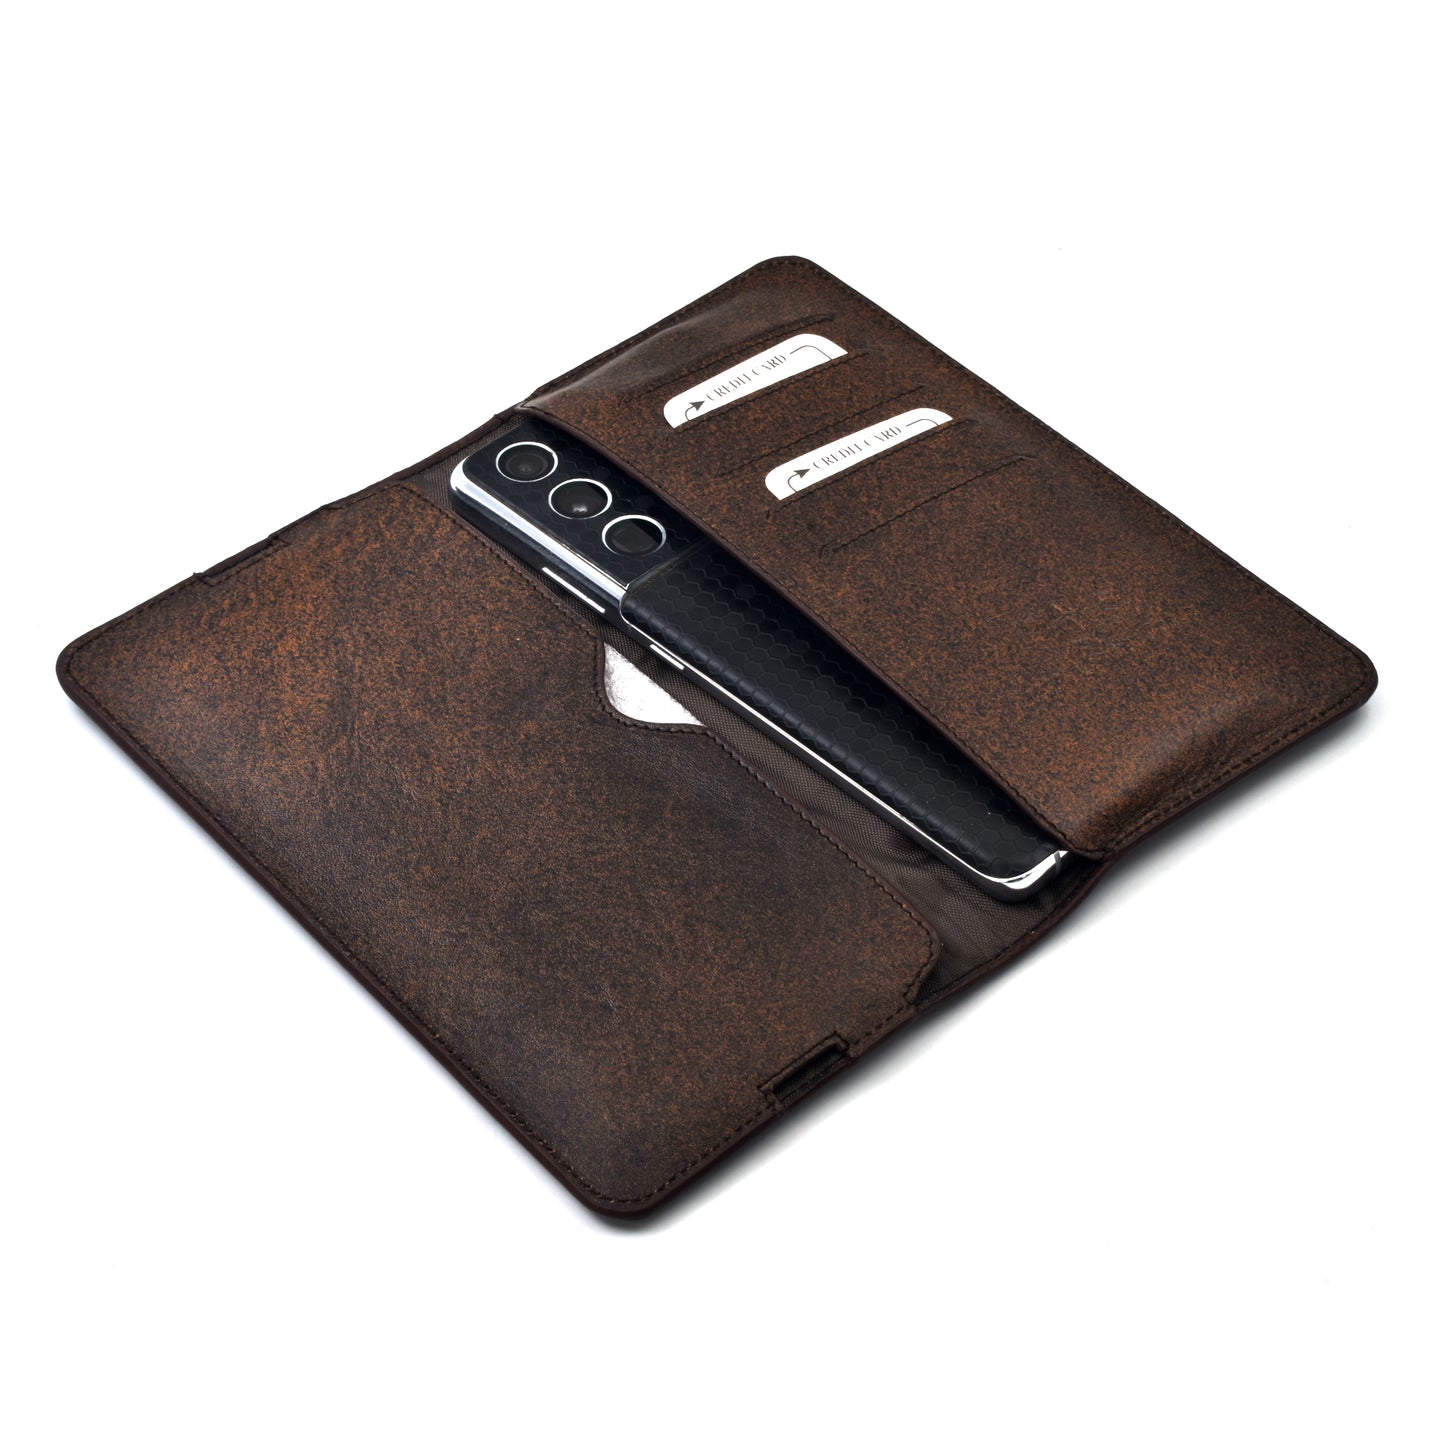 Premium Quality Long Leather Wallet | JP Wallet 87 B